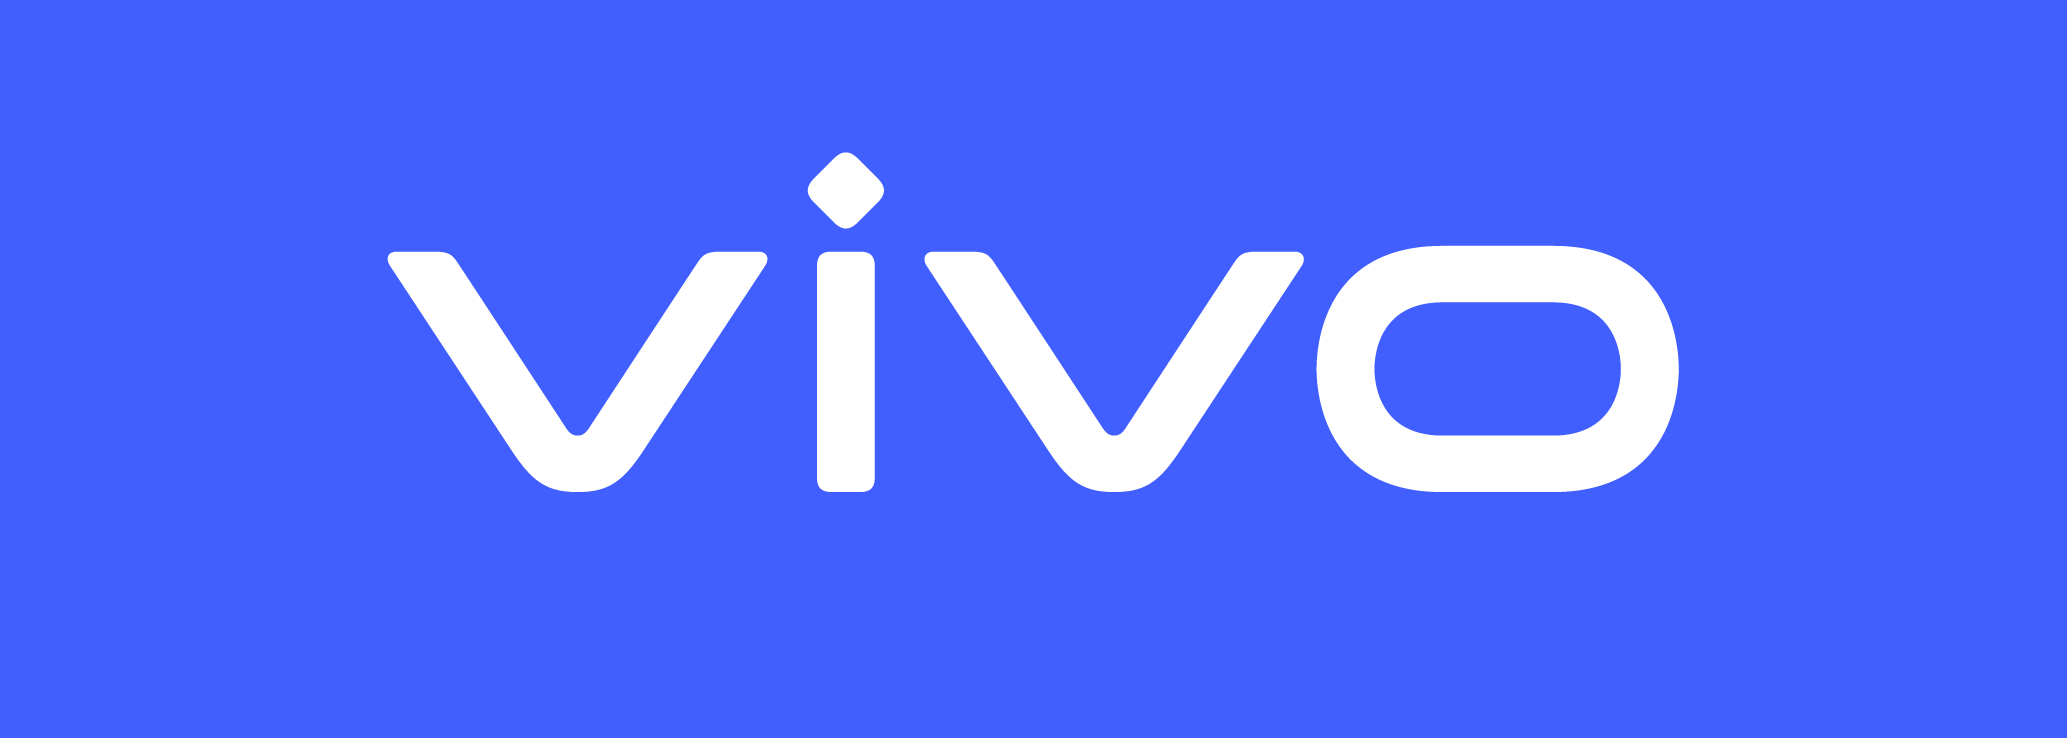 File:Vivo New Logo 2019.png.